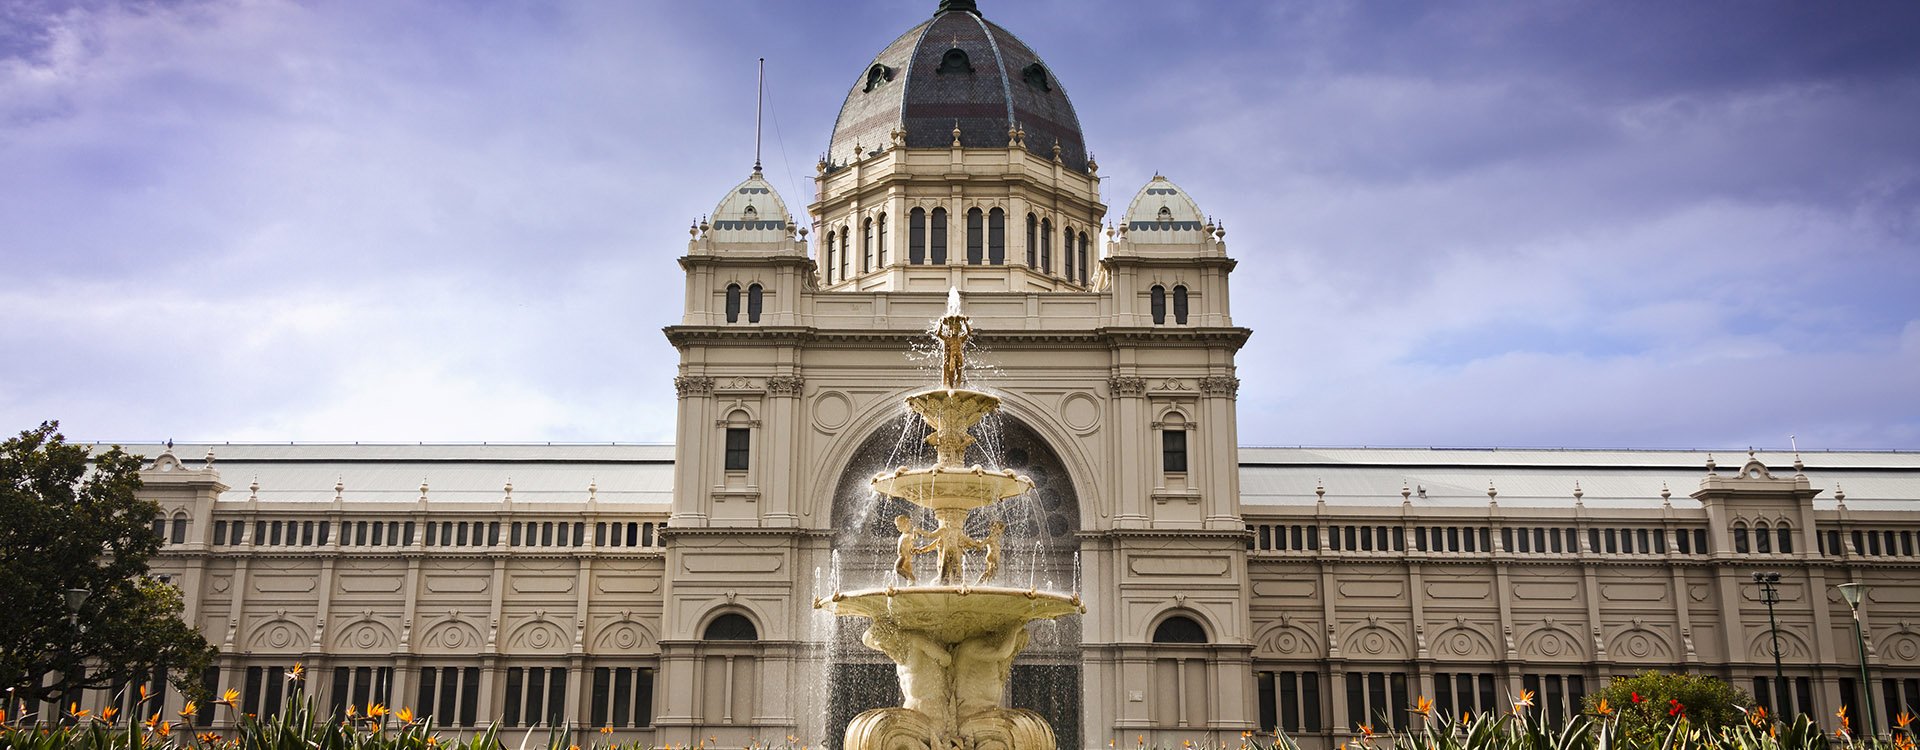 Royal Exhibition Building behind Carlton Gardens in Melbourne, Victoria, Australia. UNESCO world heritage status